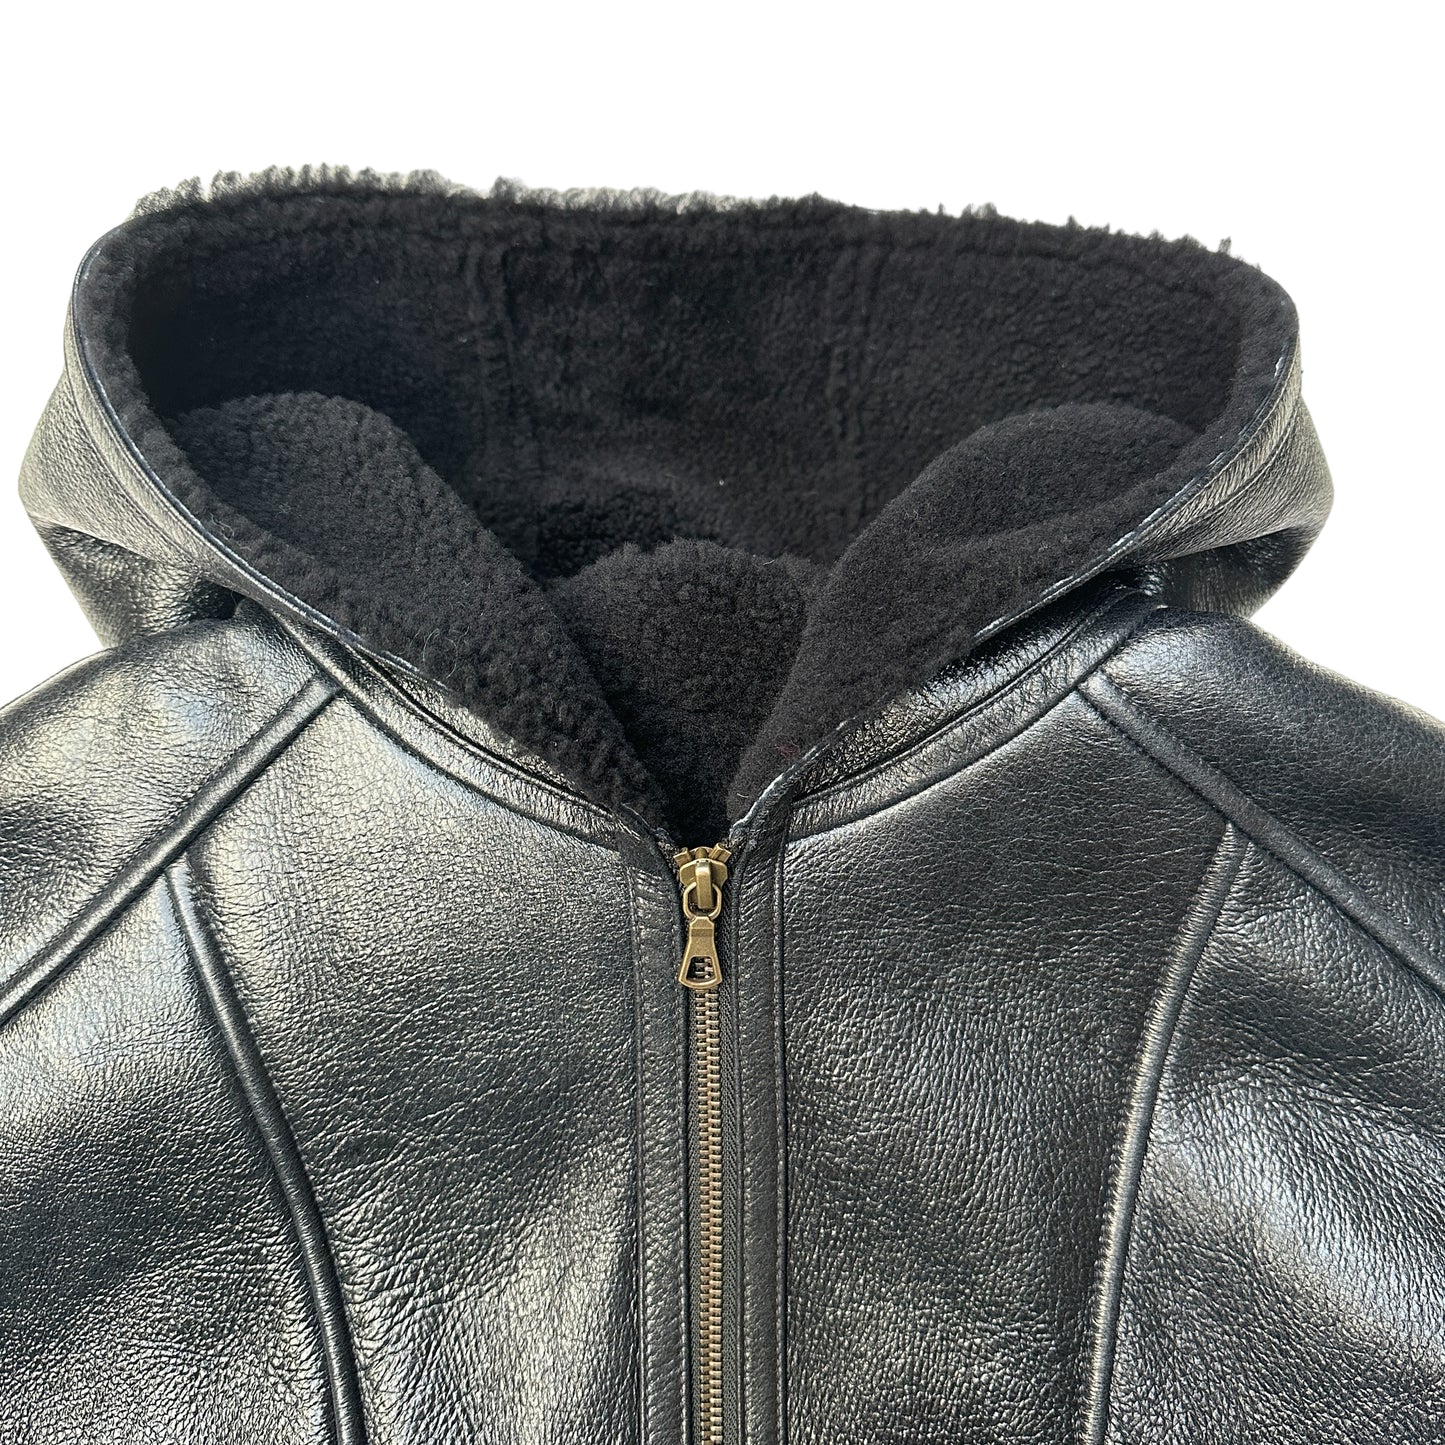 Black Lamb Leather Jacket - S